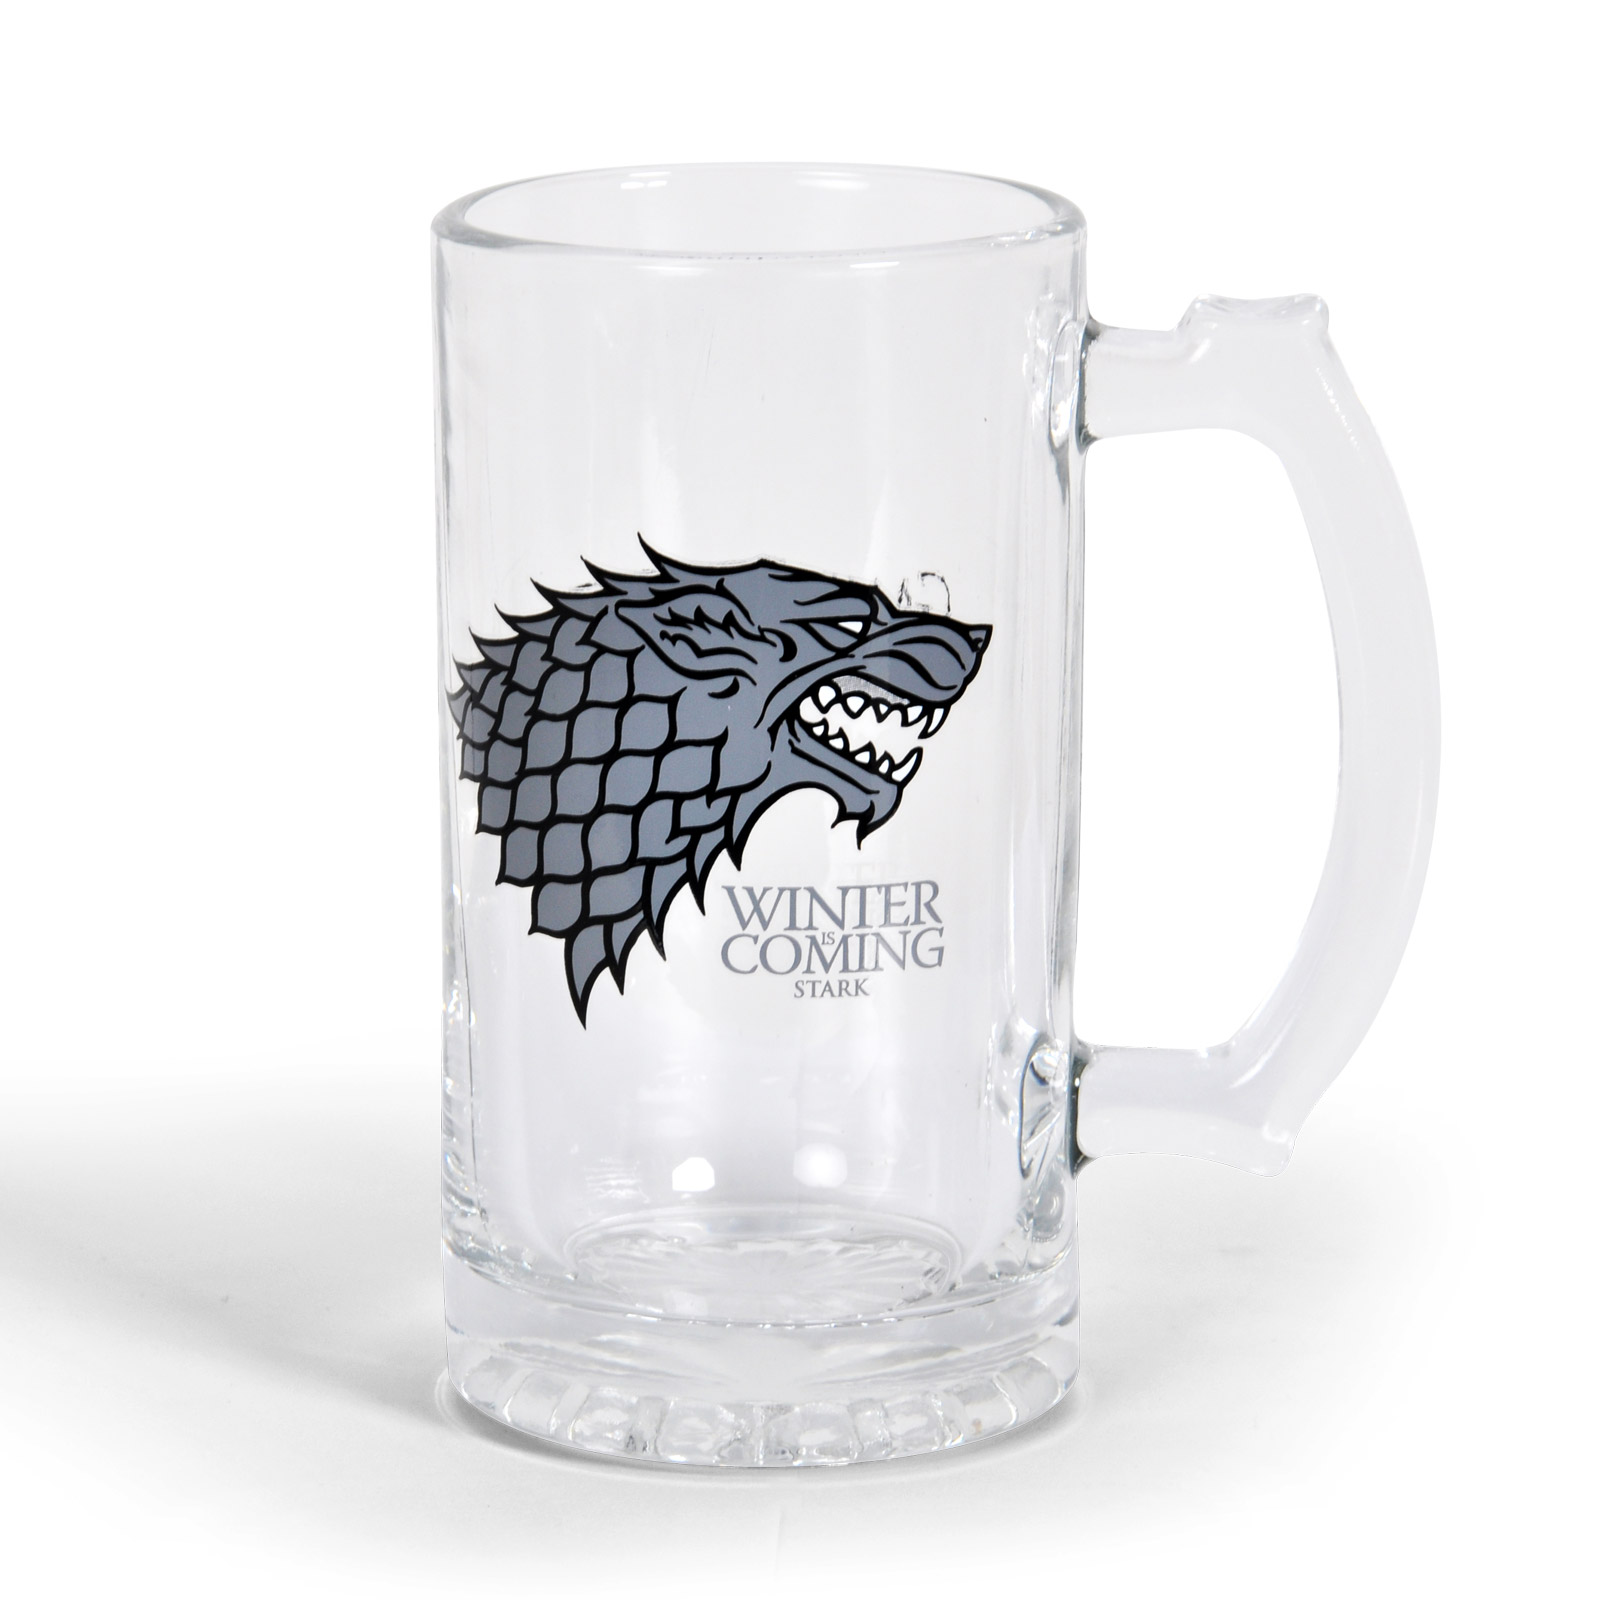 Game of Thrones - House Stark Glass Mug